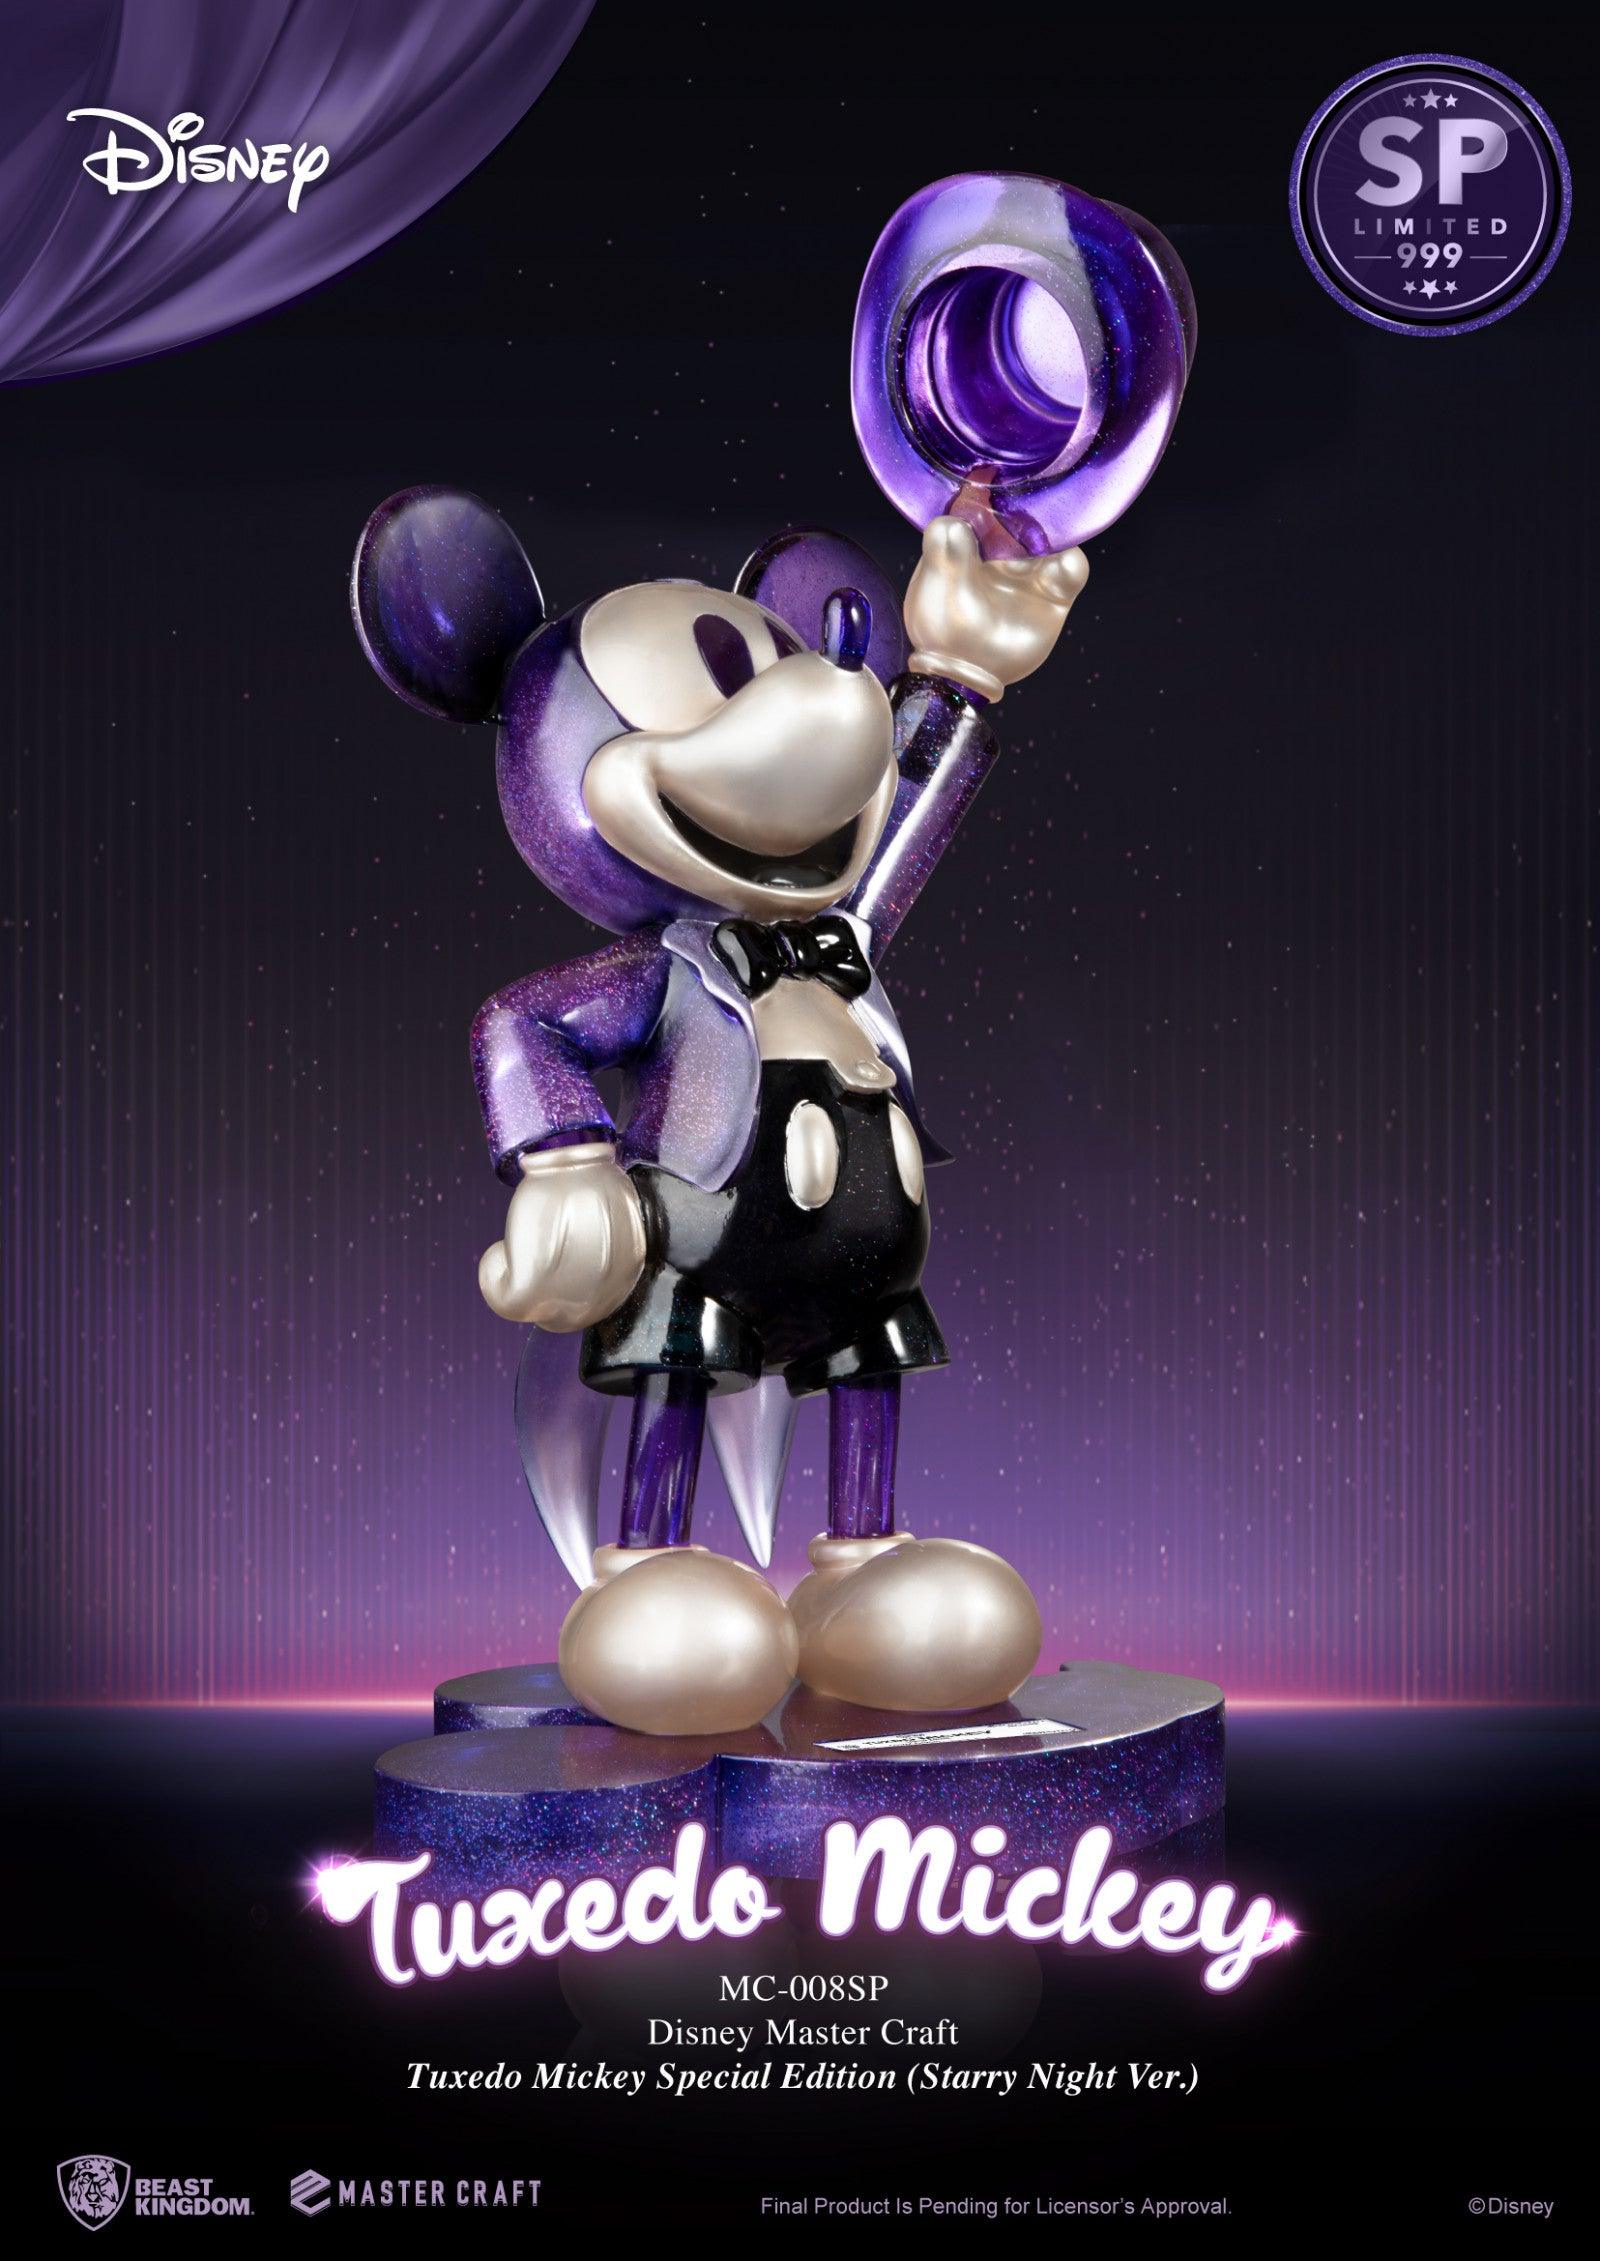 VR-102135 Beast Kingdom Master Craft Disney 100 Years of Wonder Tuxedo Mickey Mouse Special Edition (Starry Night Version) - Beast Kingdom - Titan Pop Culture